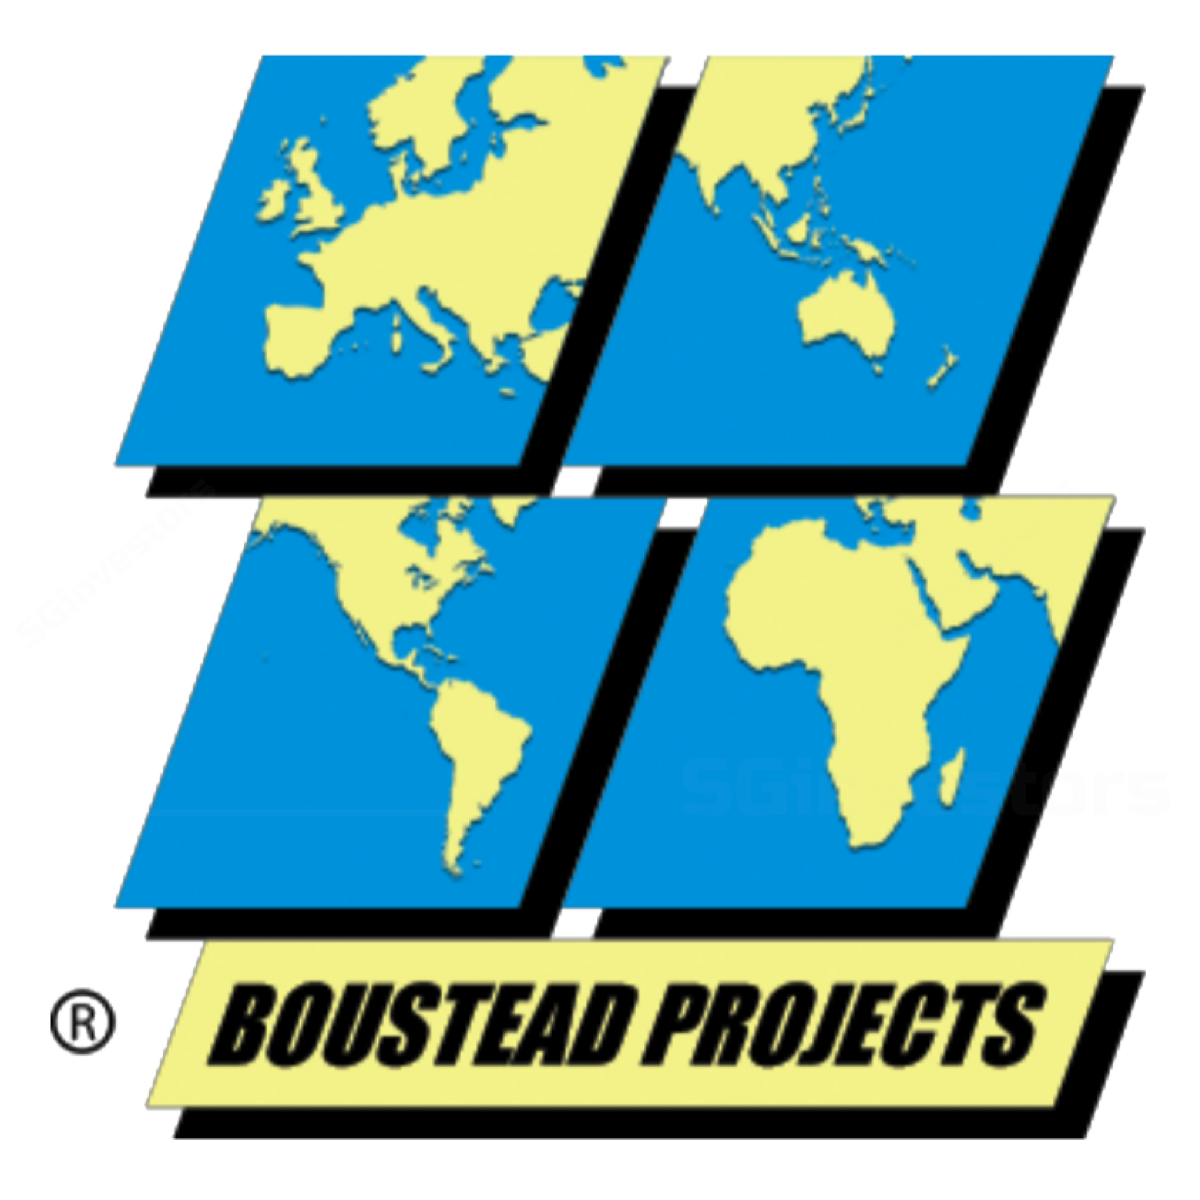 Boustead Project Land